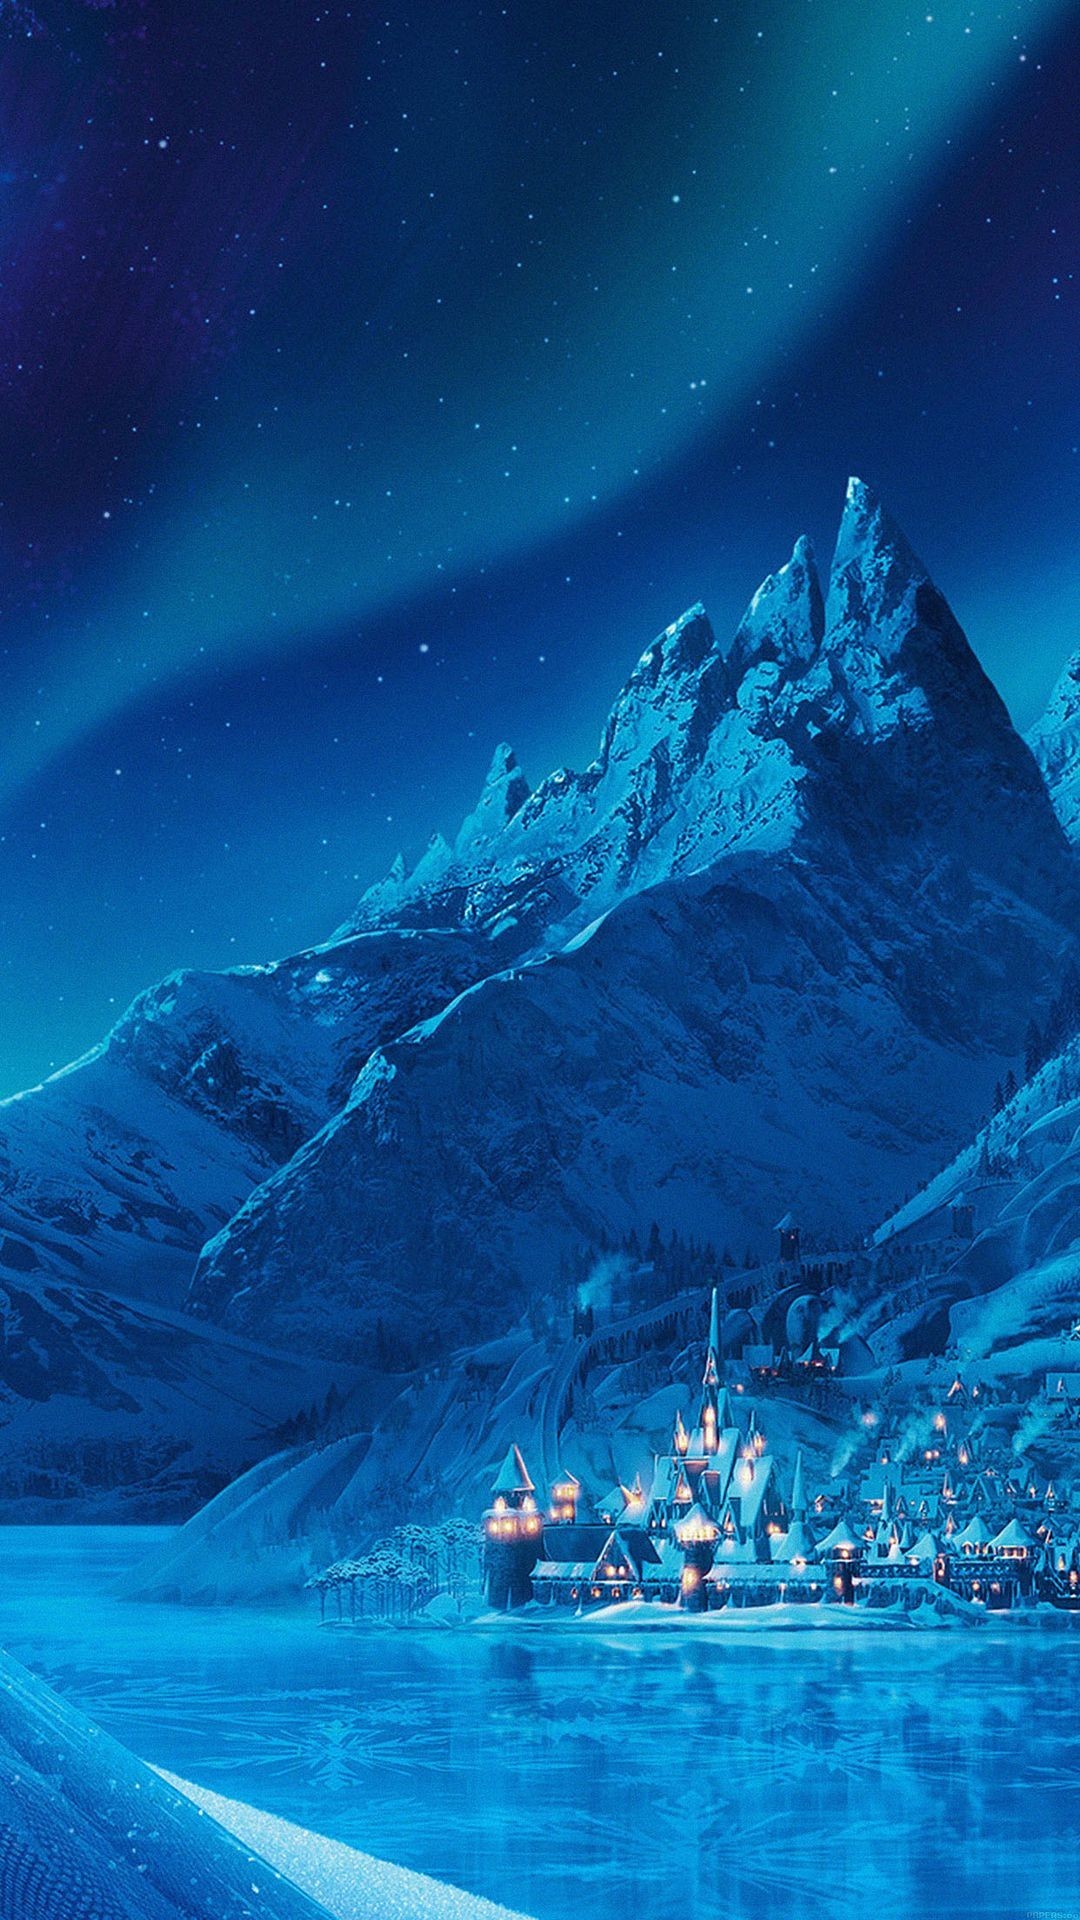 1080x1920  Tap image for more iPhone Disney wallpapers! Elsa Frozen -  @mobile9 | Wallpaper